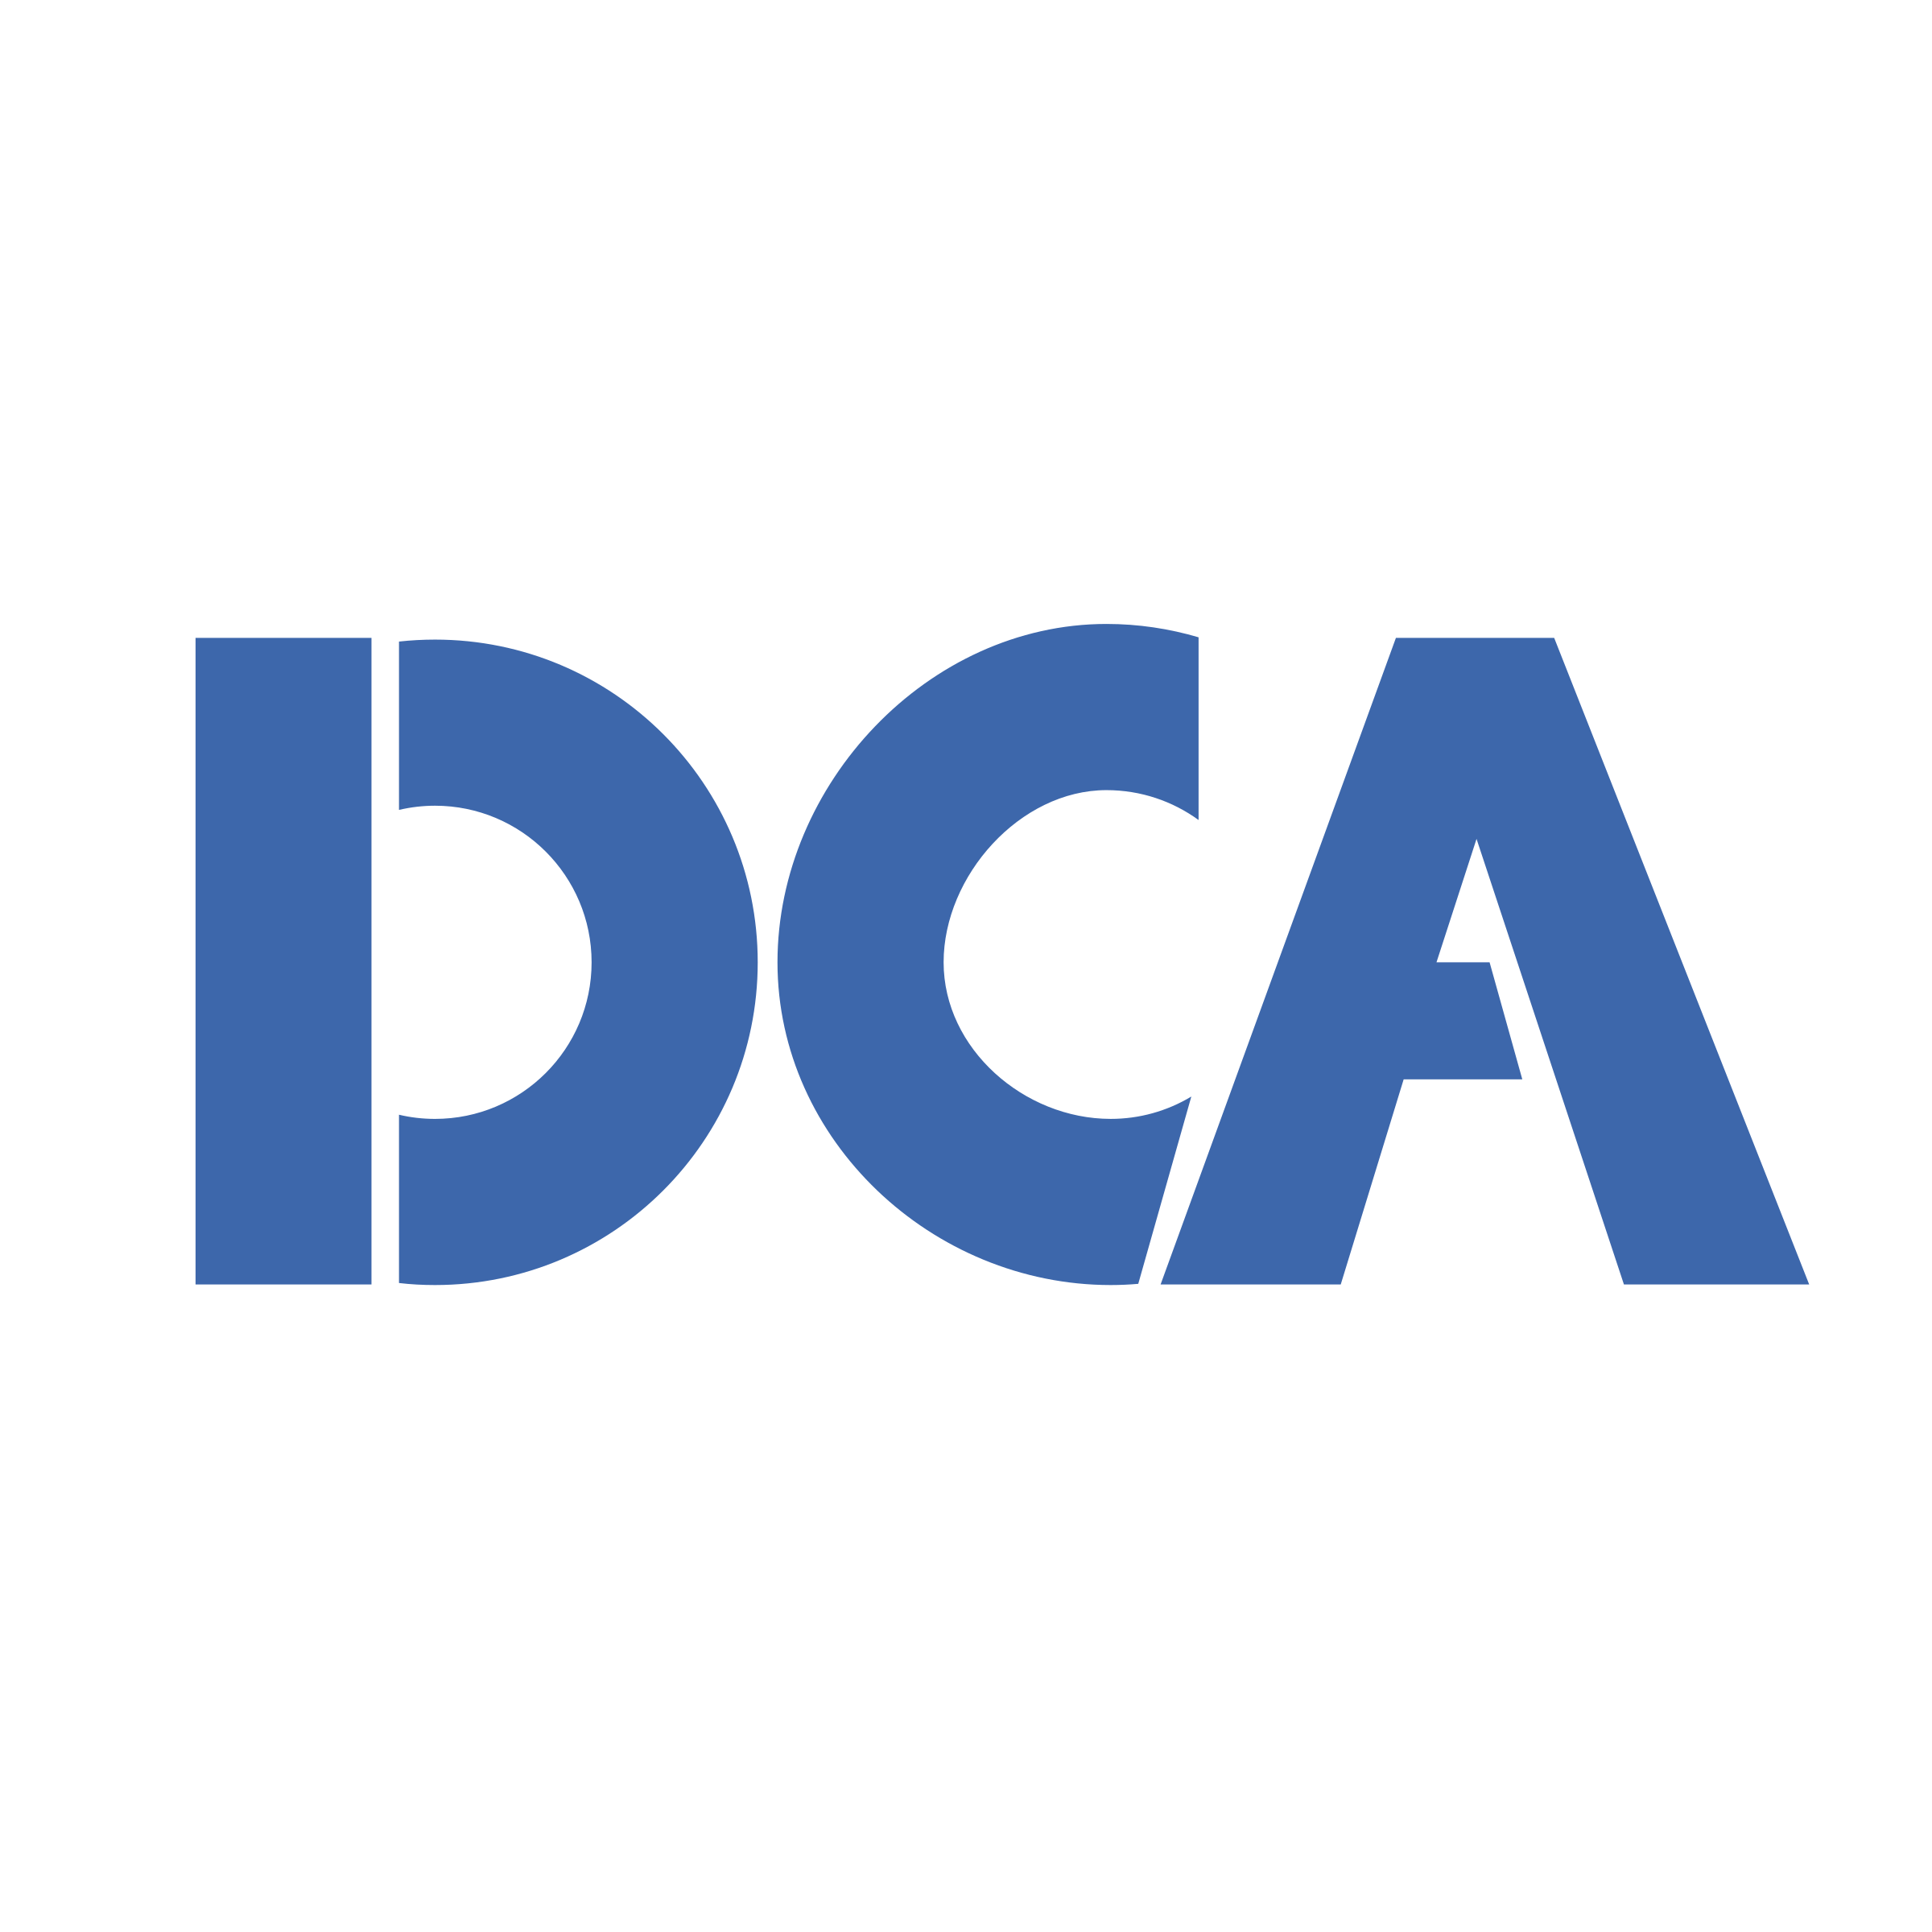 DCA Logo - DCA Logo PNG Transparent & SVG Vector